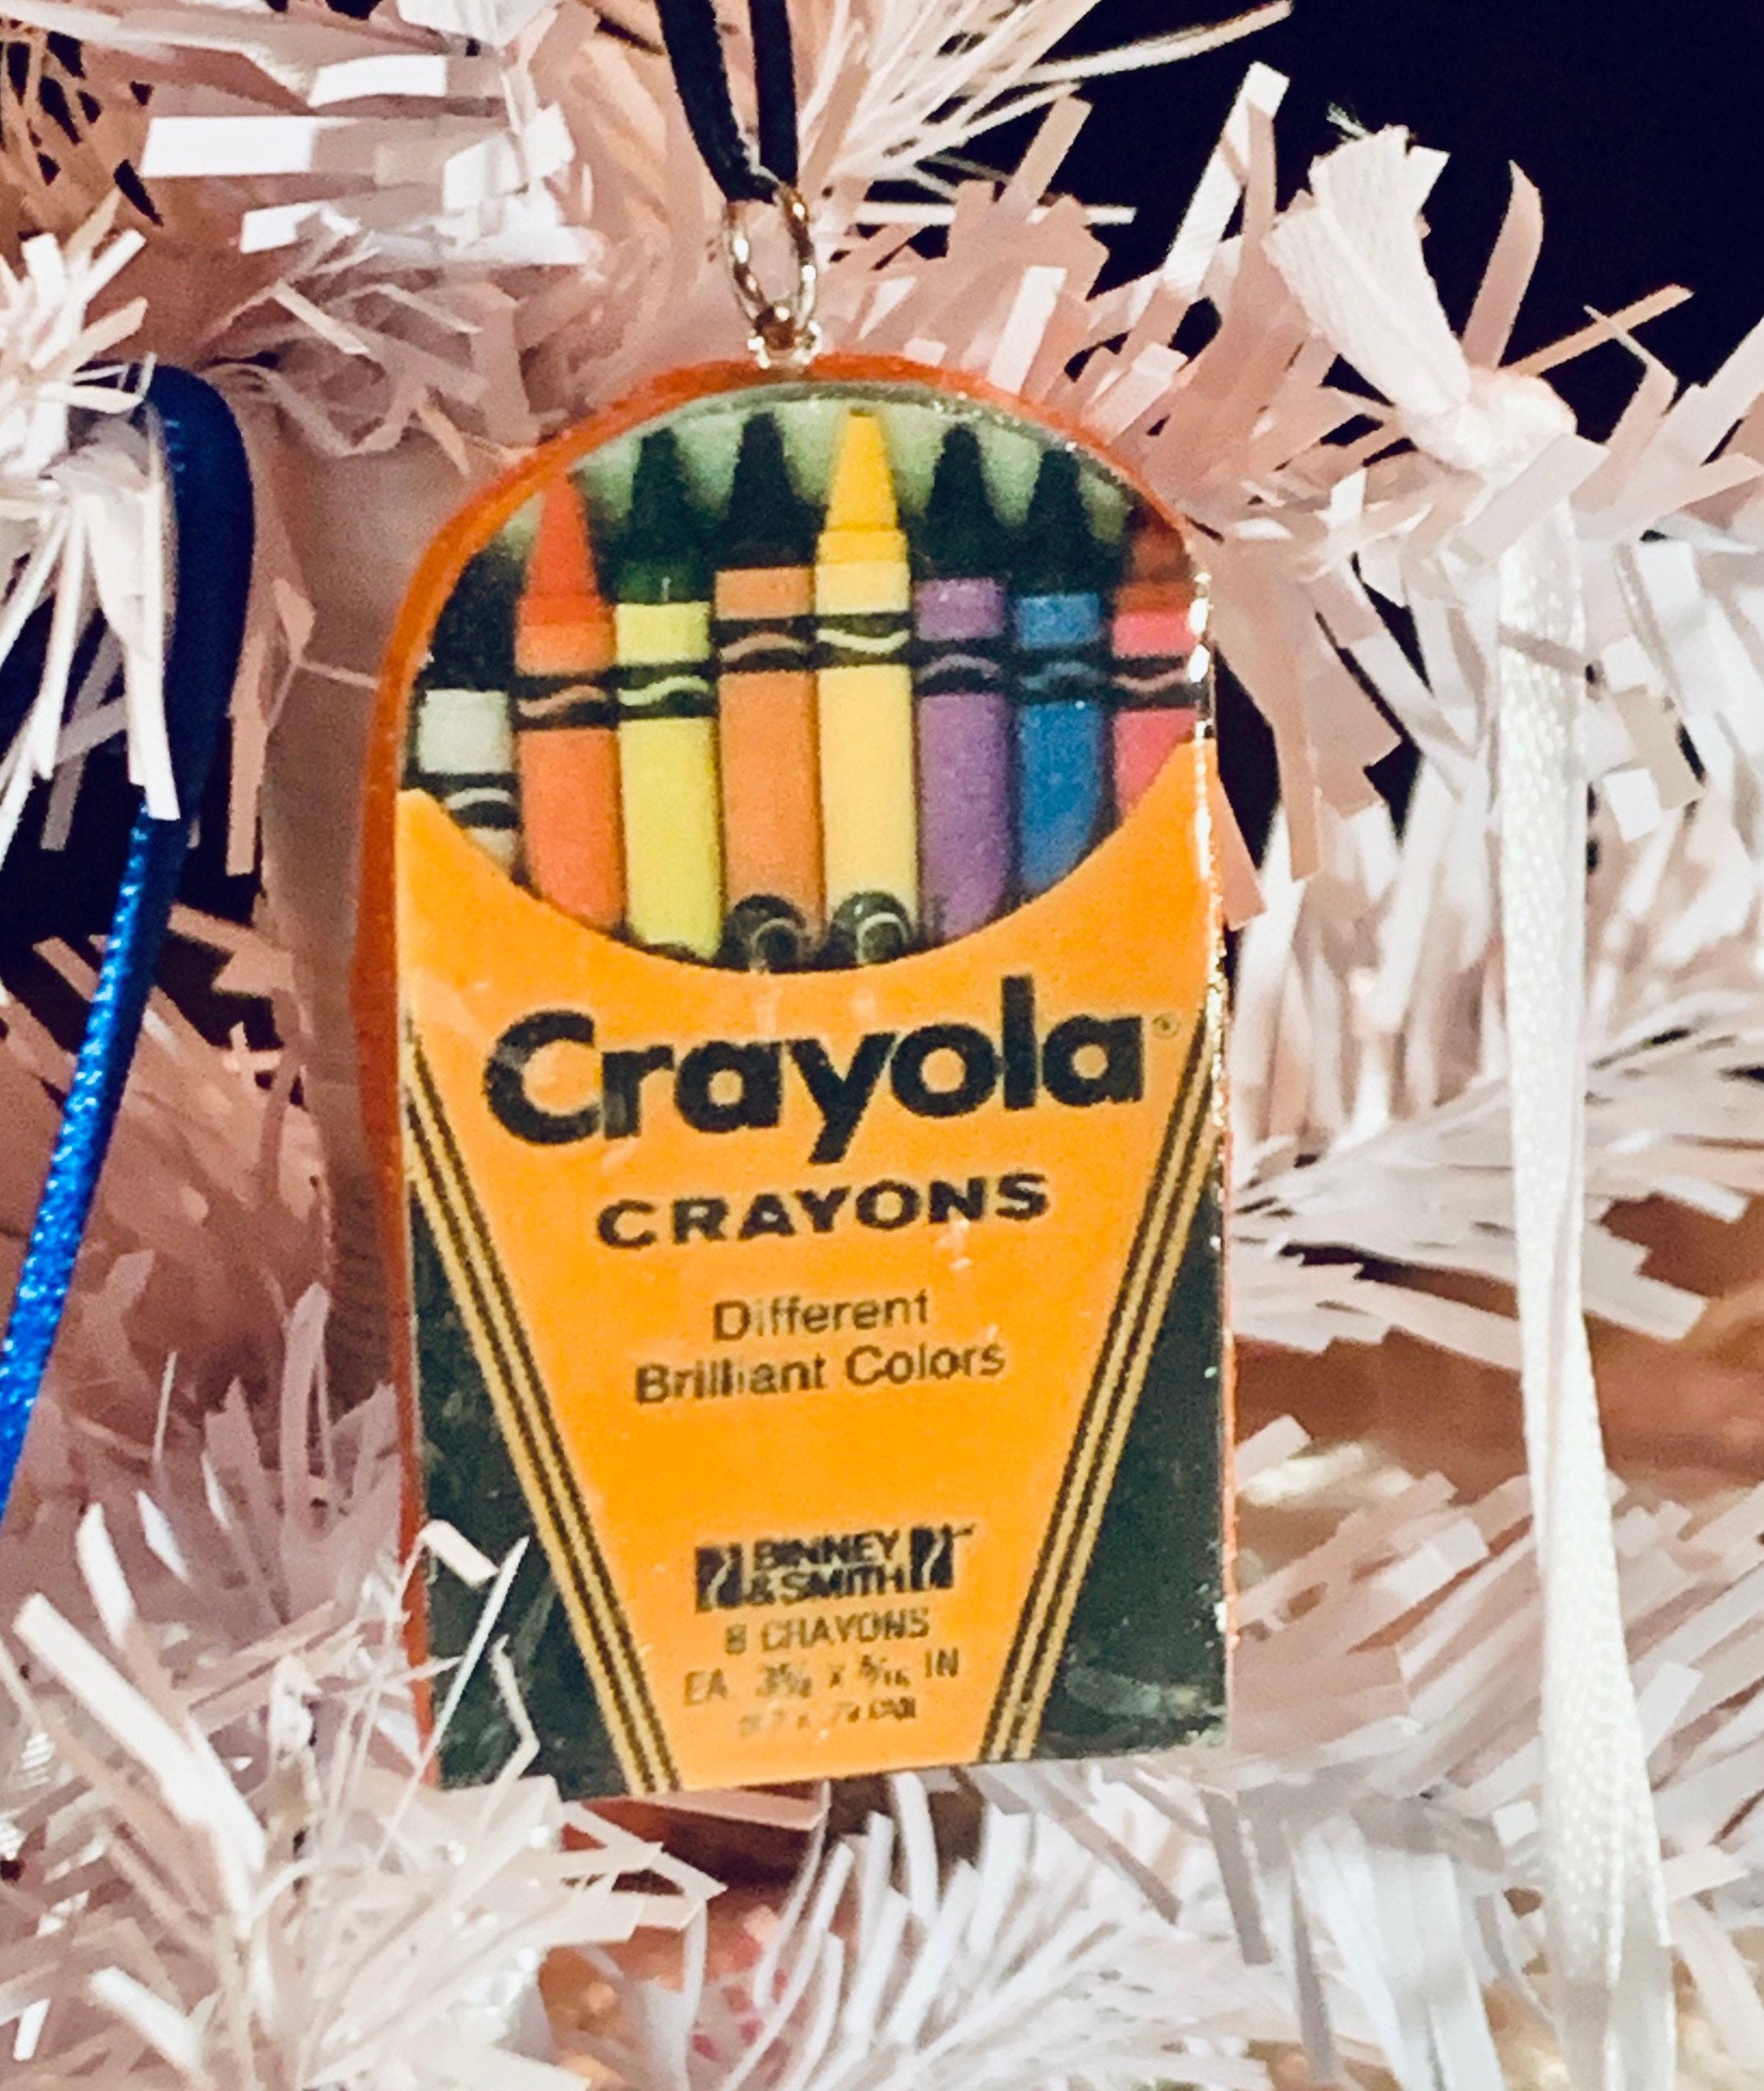 Indigo Crayons - 45 crayons - Crayola Crayons - Bulk Crayons - refill -  classroom - coloring - crayon